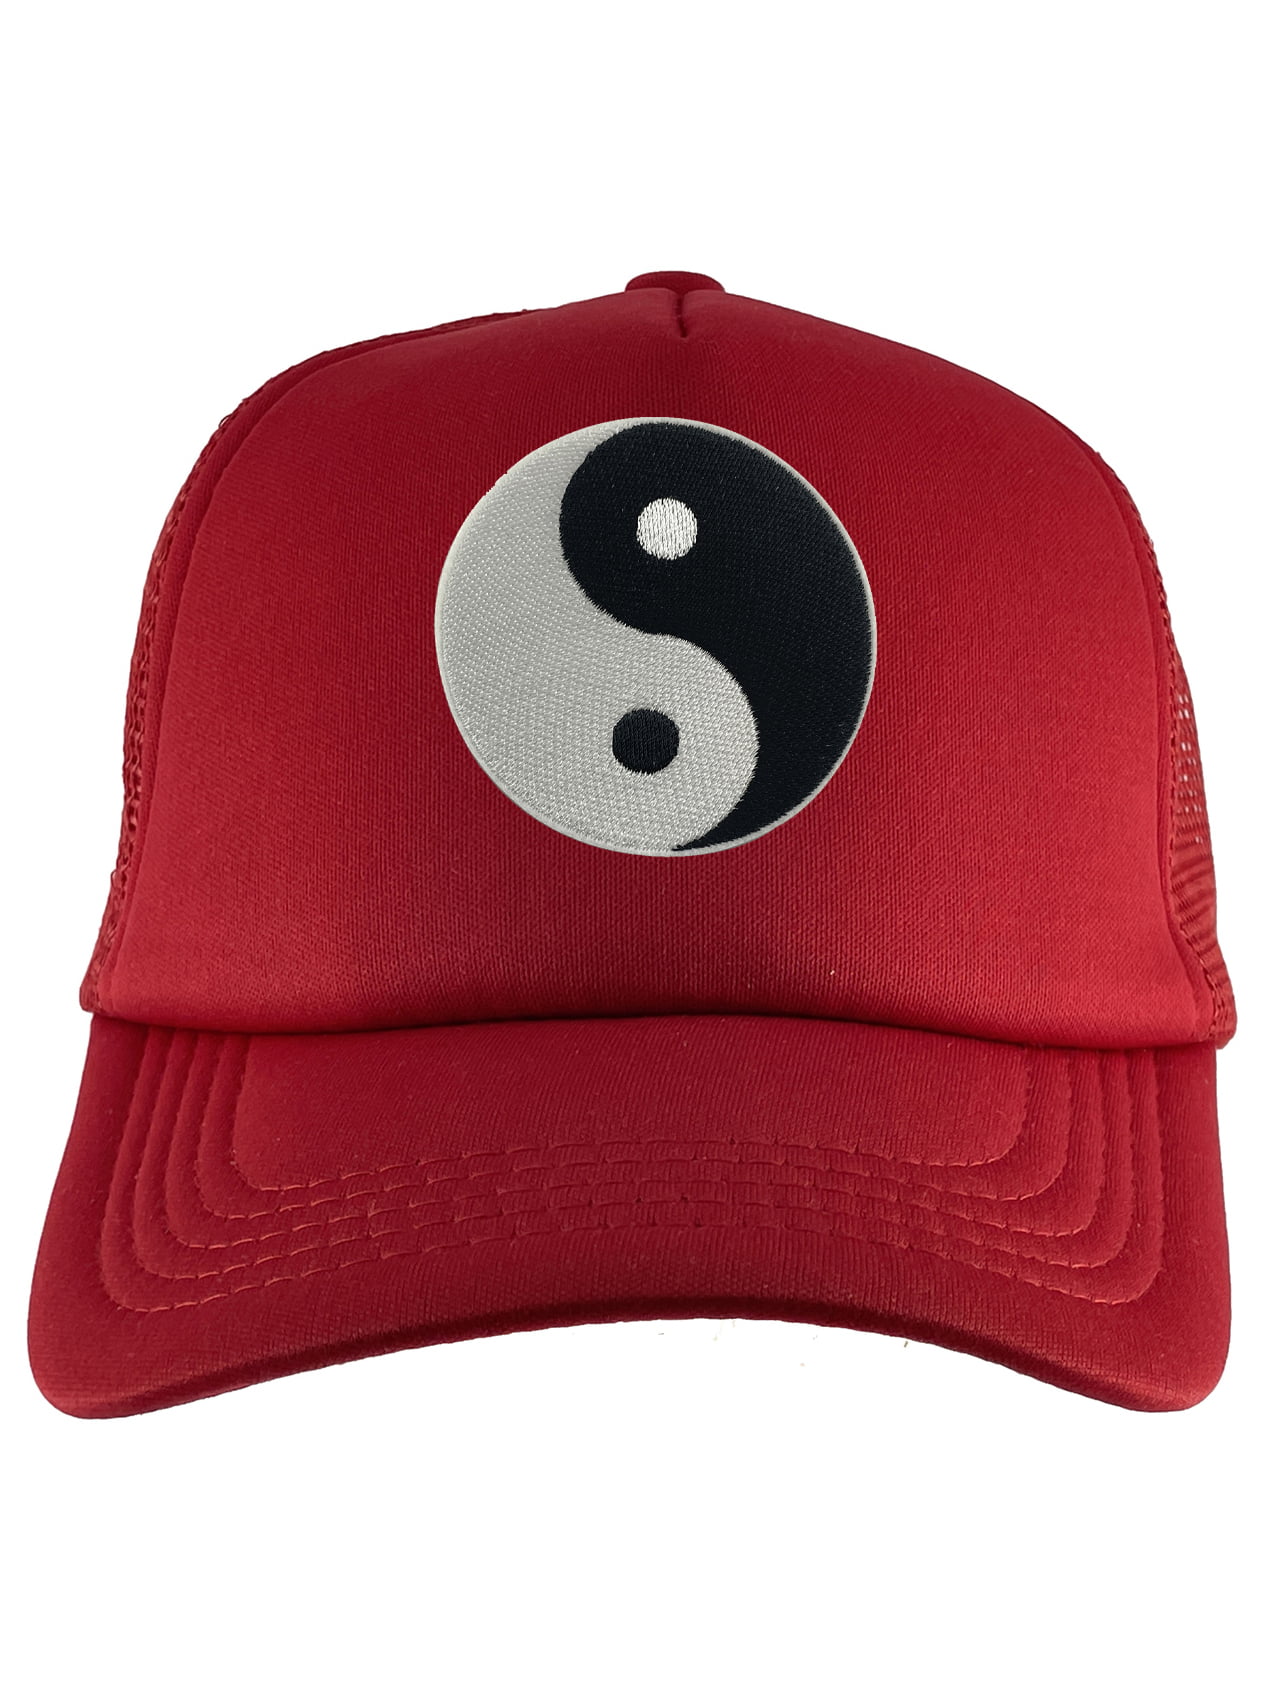 Fish in Yin Yang-1 Unisex Custom Cowboy Sun Hat Adjustable Baseball Cap